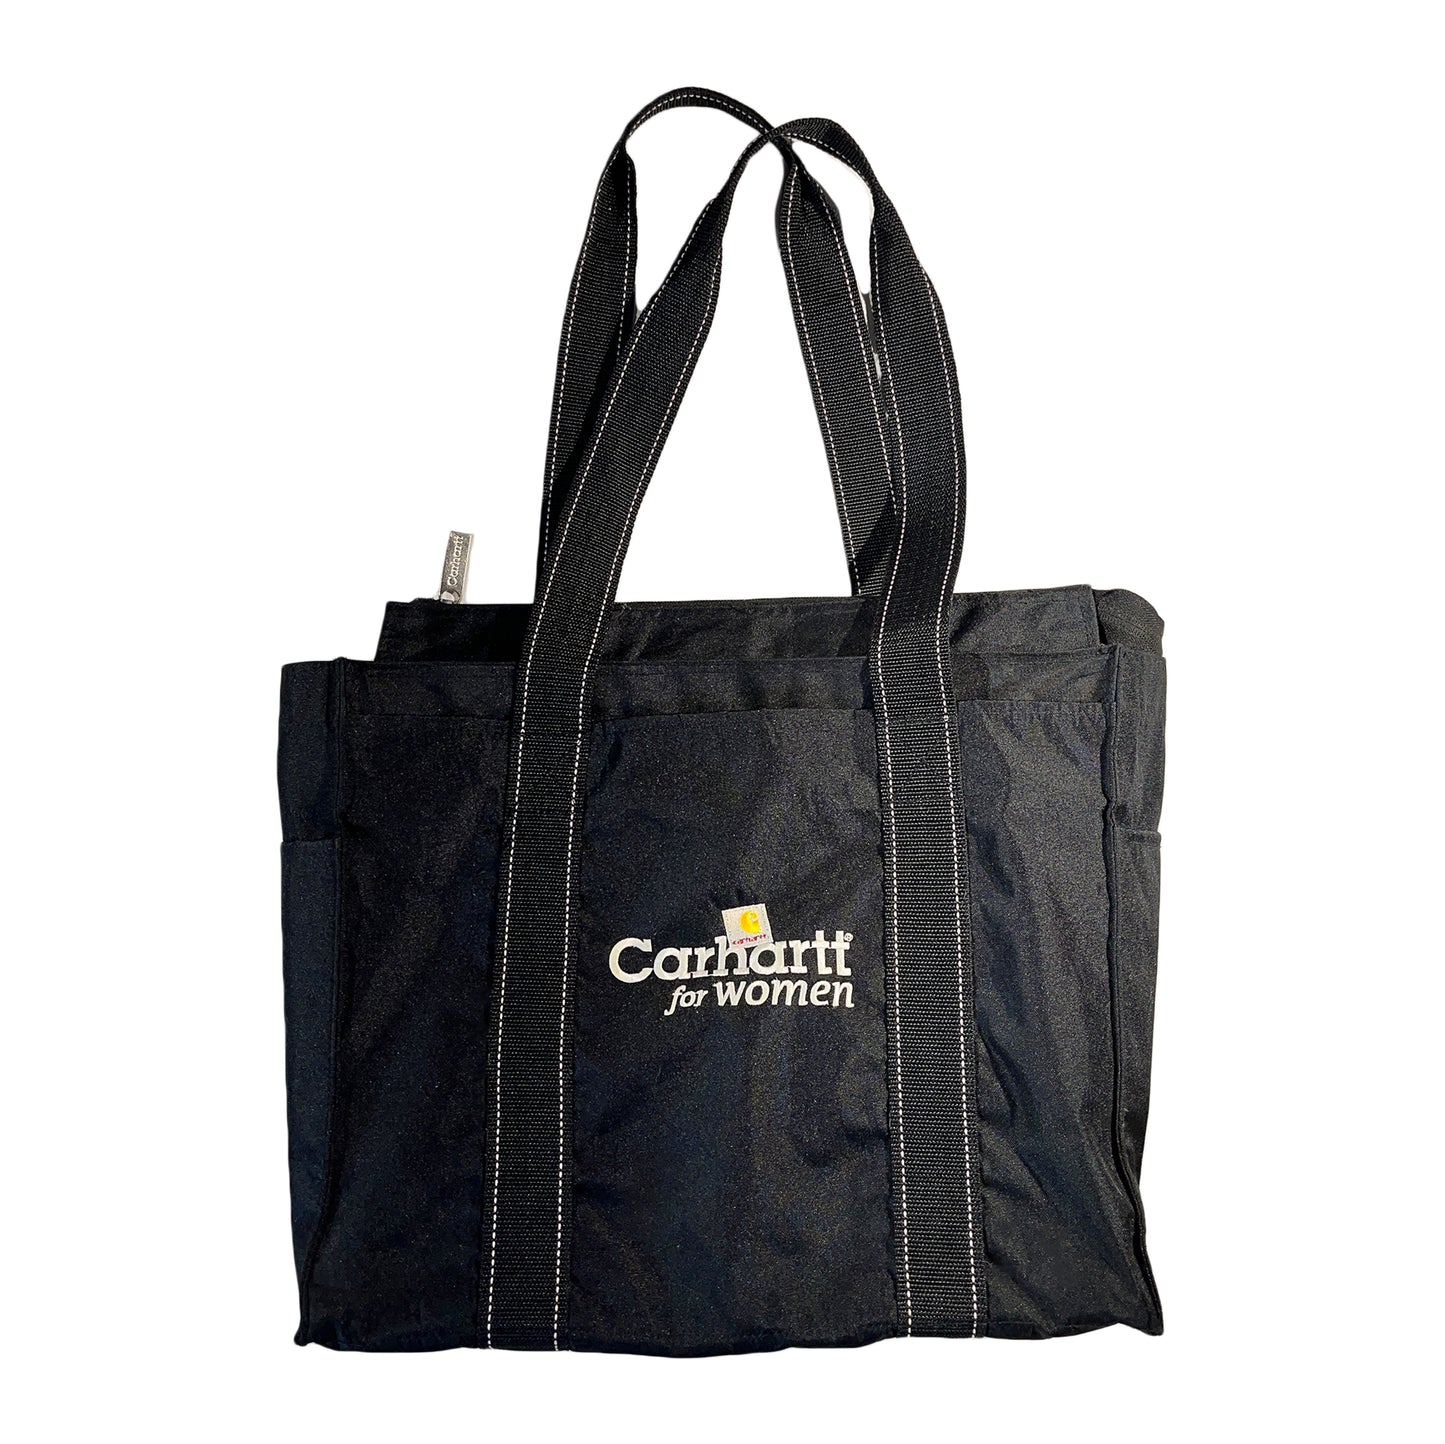 Carhartt Tote Bag For Women Vertical Open Tote Signature Black Essentials